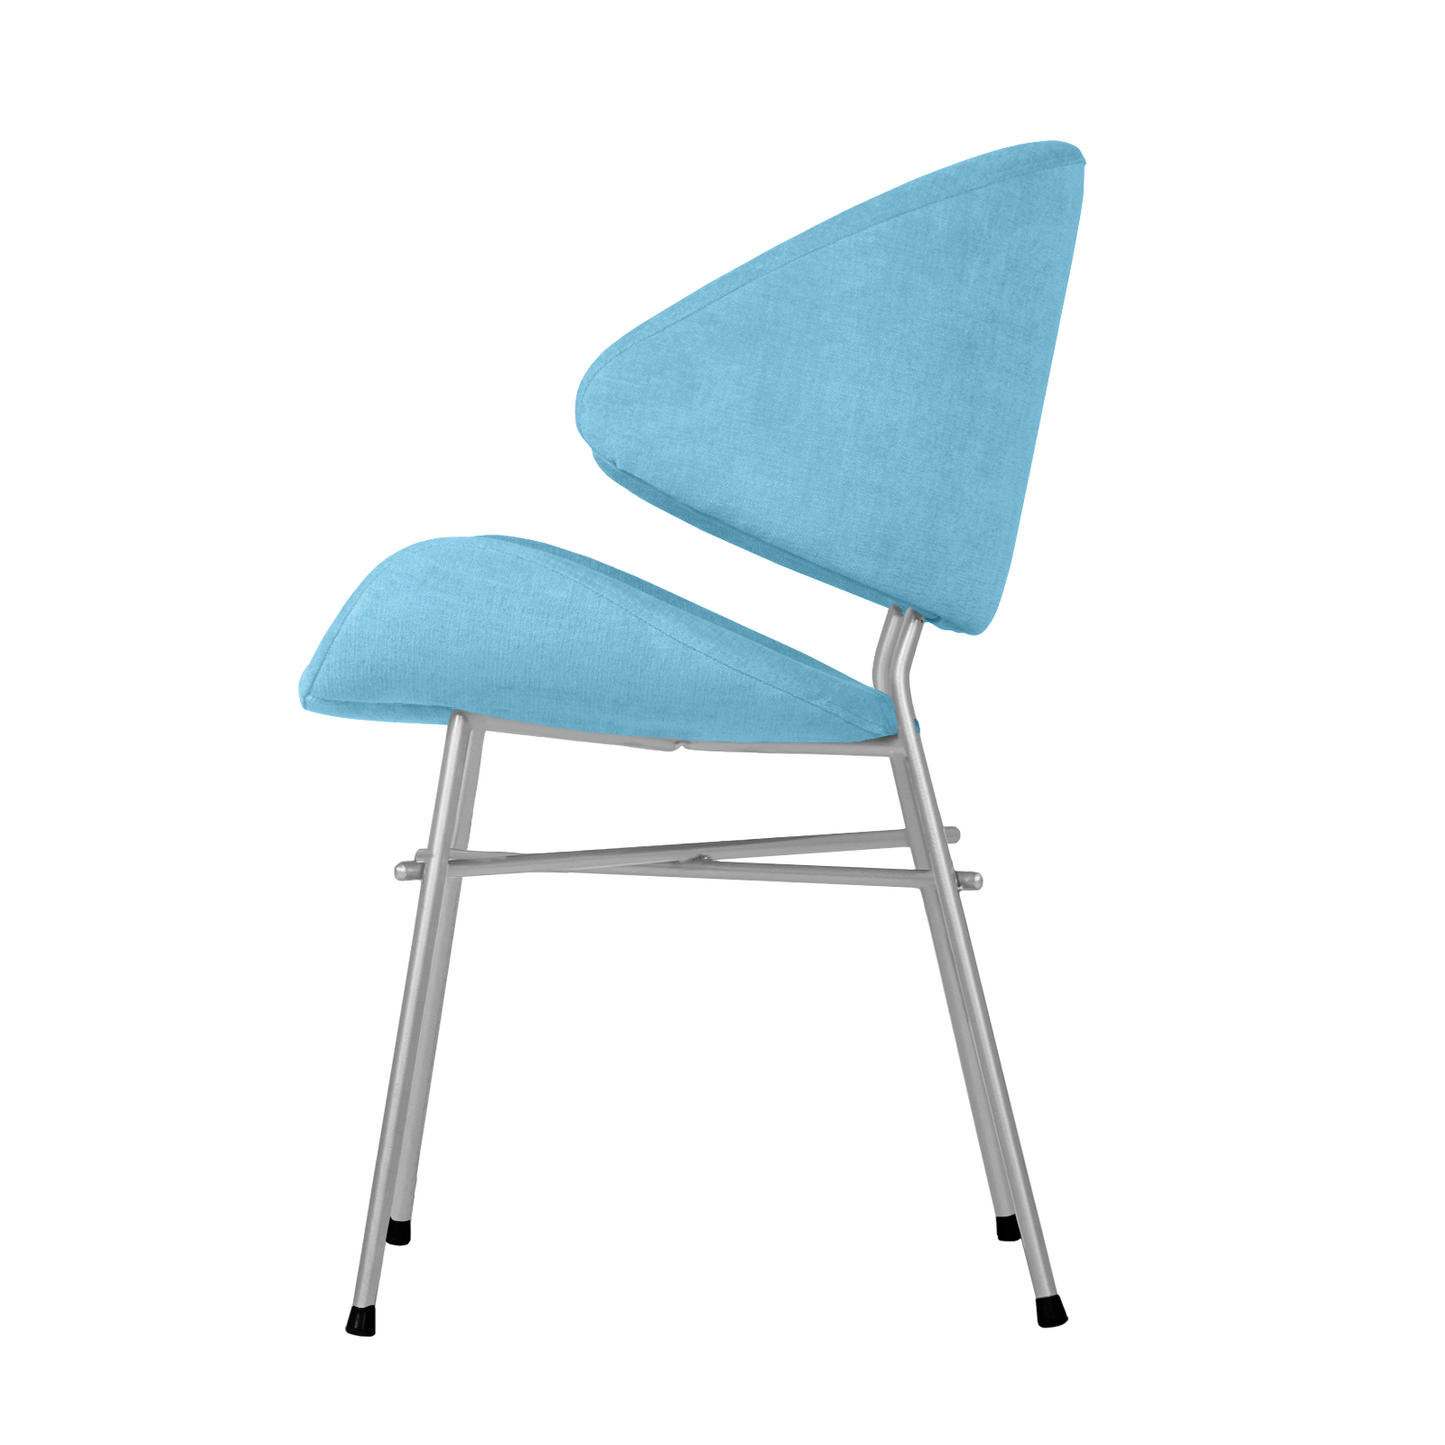 Chair Cheri Trend Chrome - Light Blue